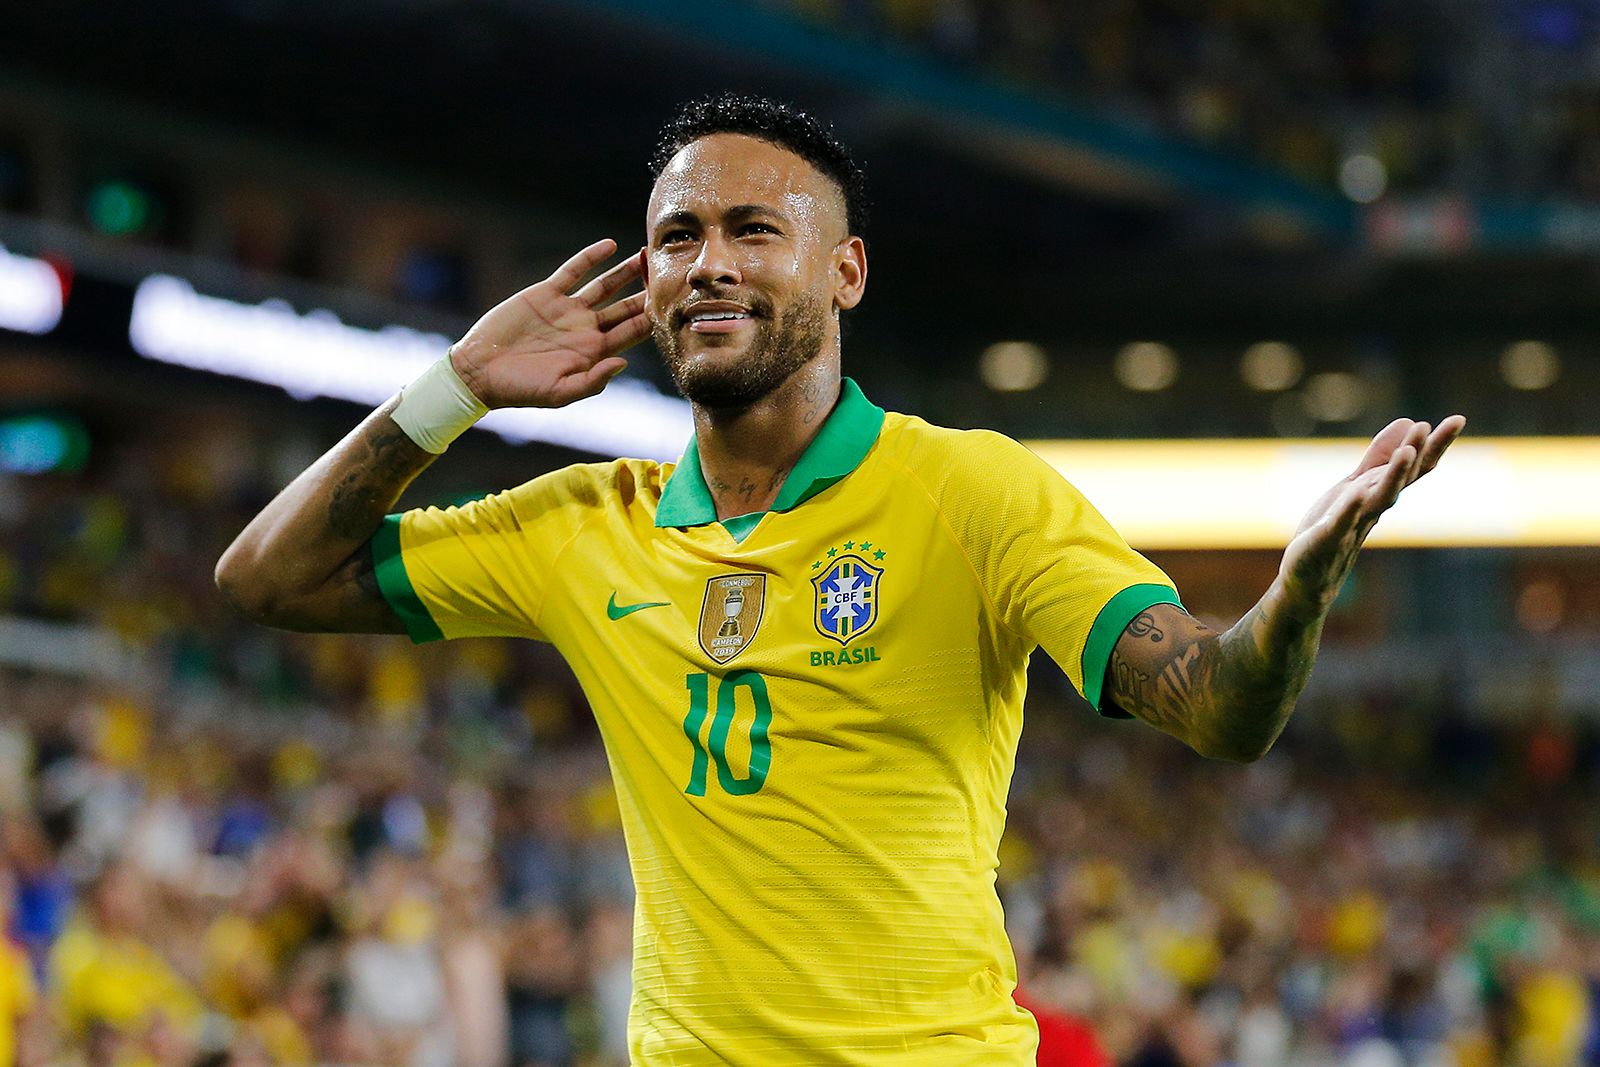 Neymar Jr.: Brazilian soccer star faces criticism for Bolsonaro support